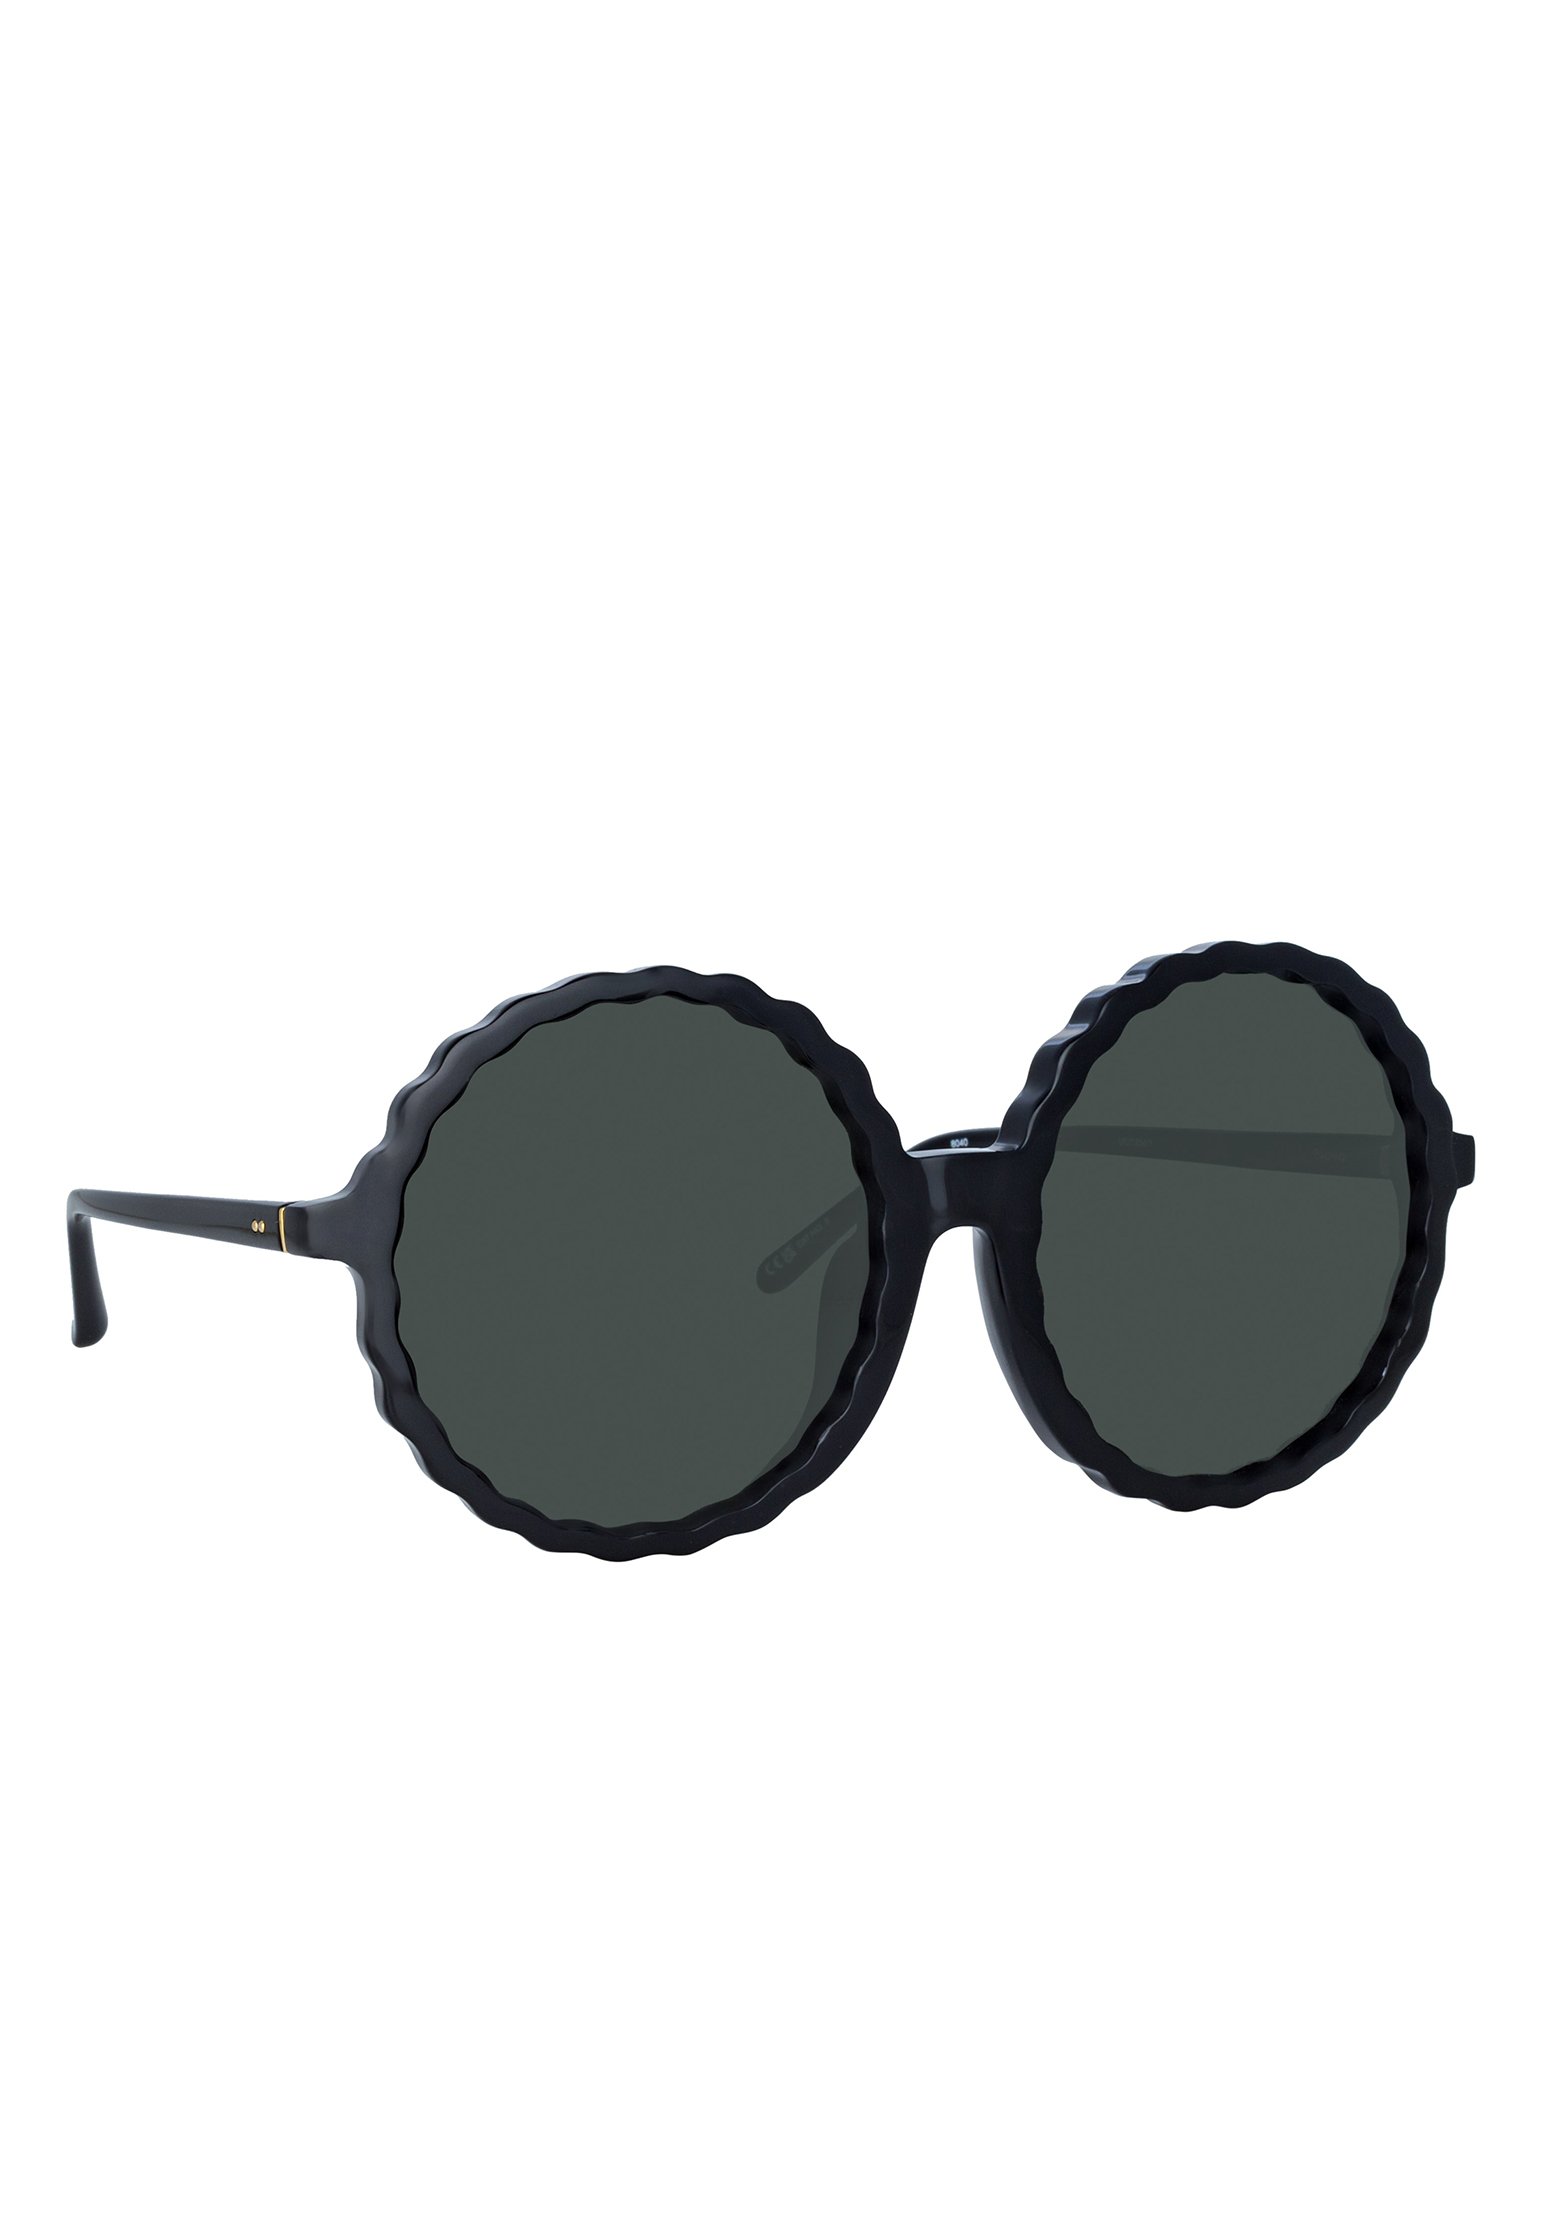 Sunglasses LINDA FARROW Color: black (Code: 2215) in online store Allure